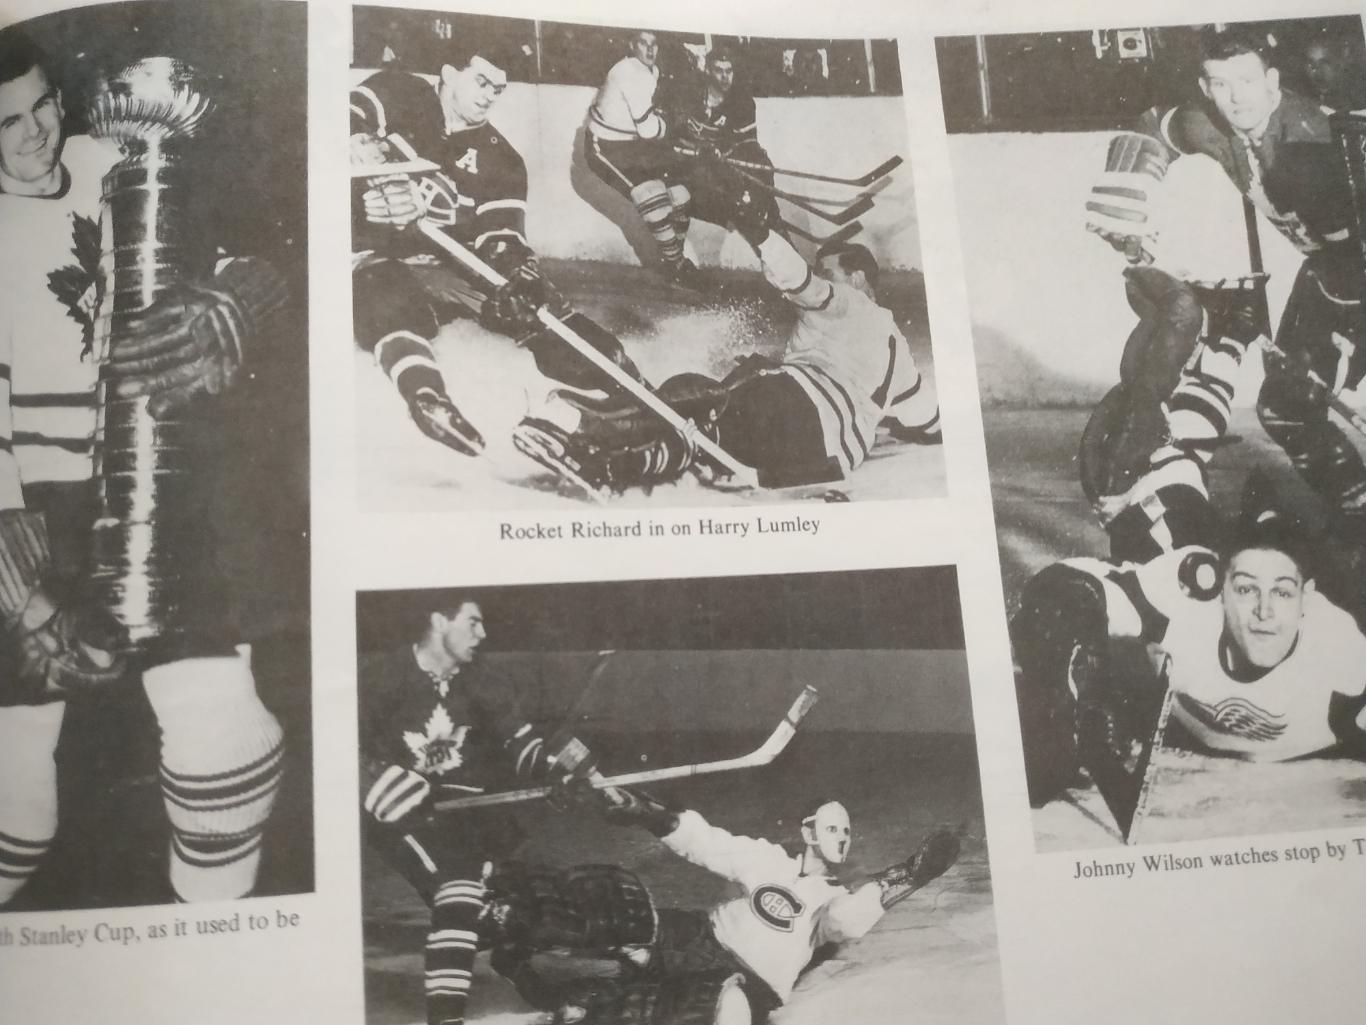 ХОККЕЙ СПРАВОЧНИК ЕЖЕГОДНИК ЗАЛ СЛАВЫ НХЛ NHL 1982 HOCKEY HALL OF FAME HERITAGE 1